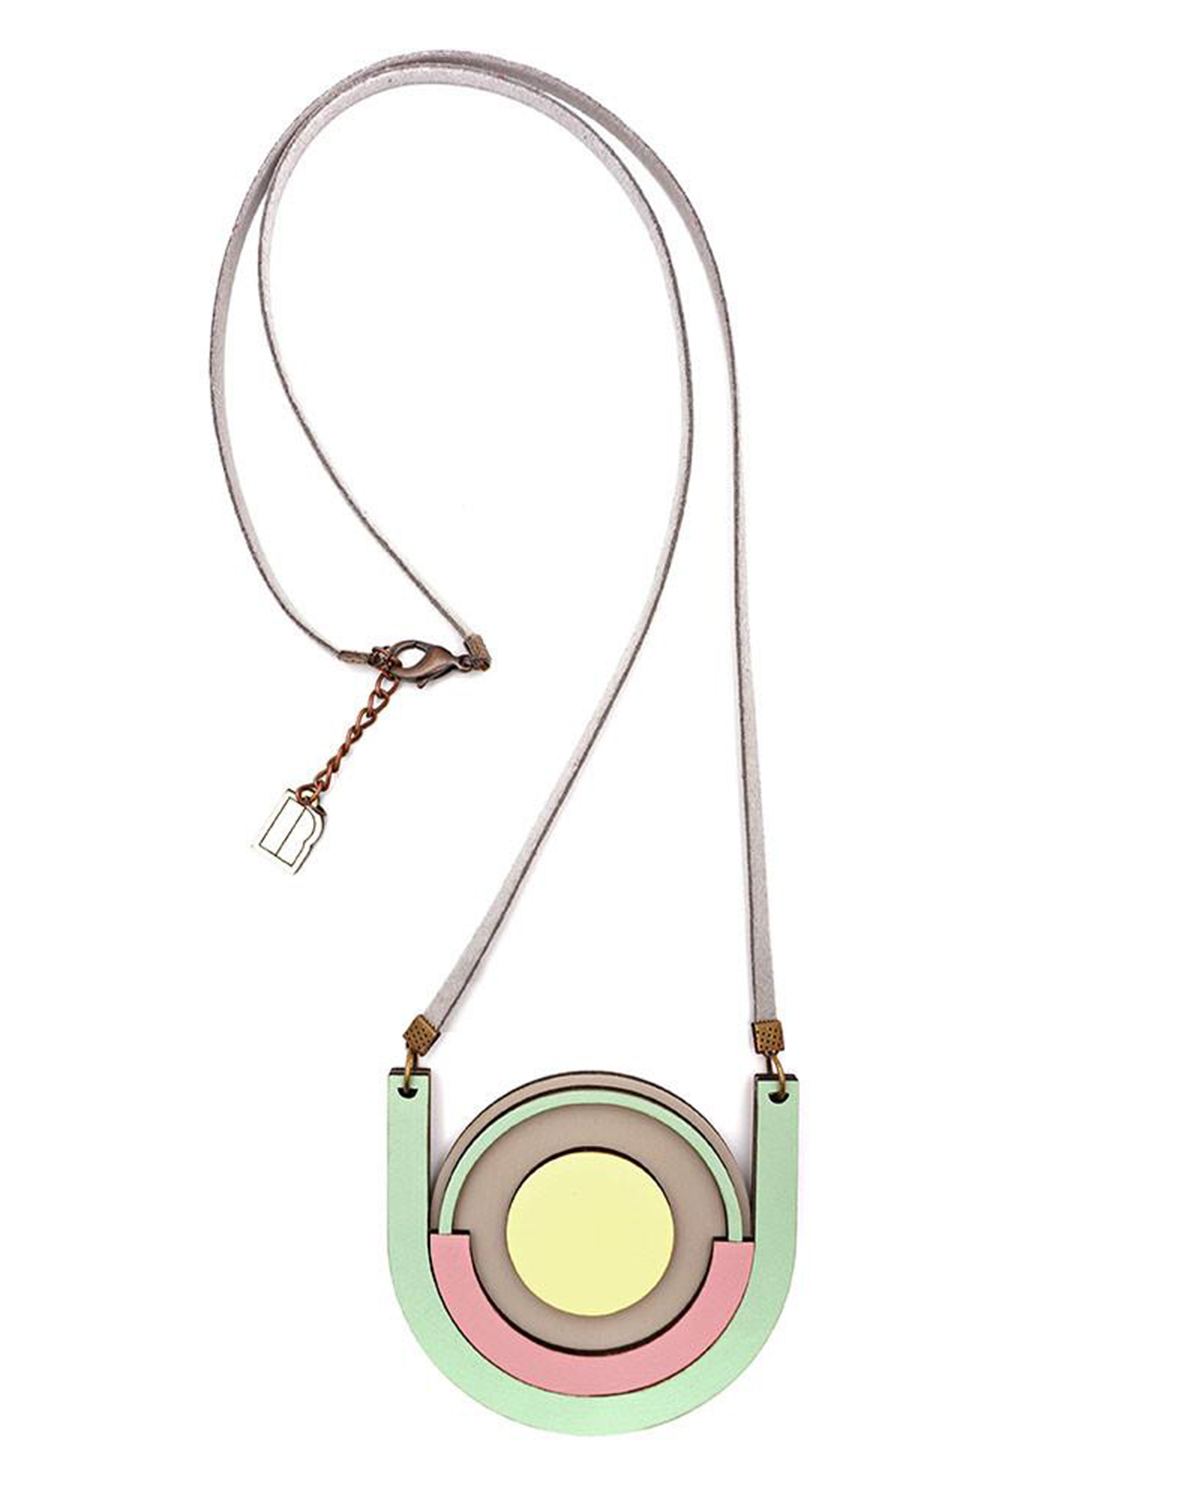 Moon necklace | Lasercut jewellery | Rename jewelry | Made in Belgrade